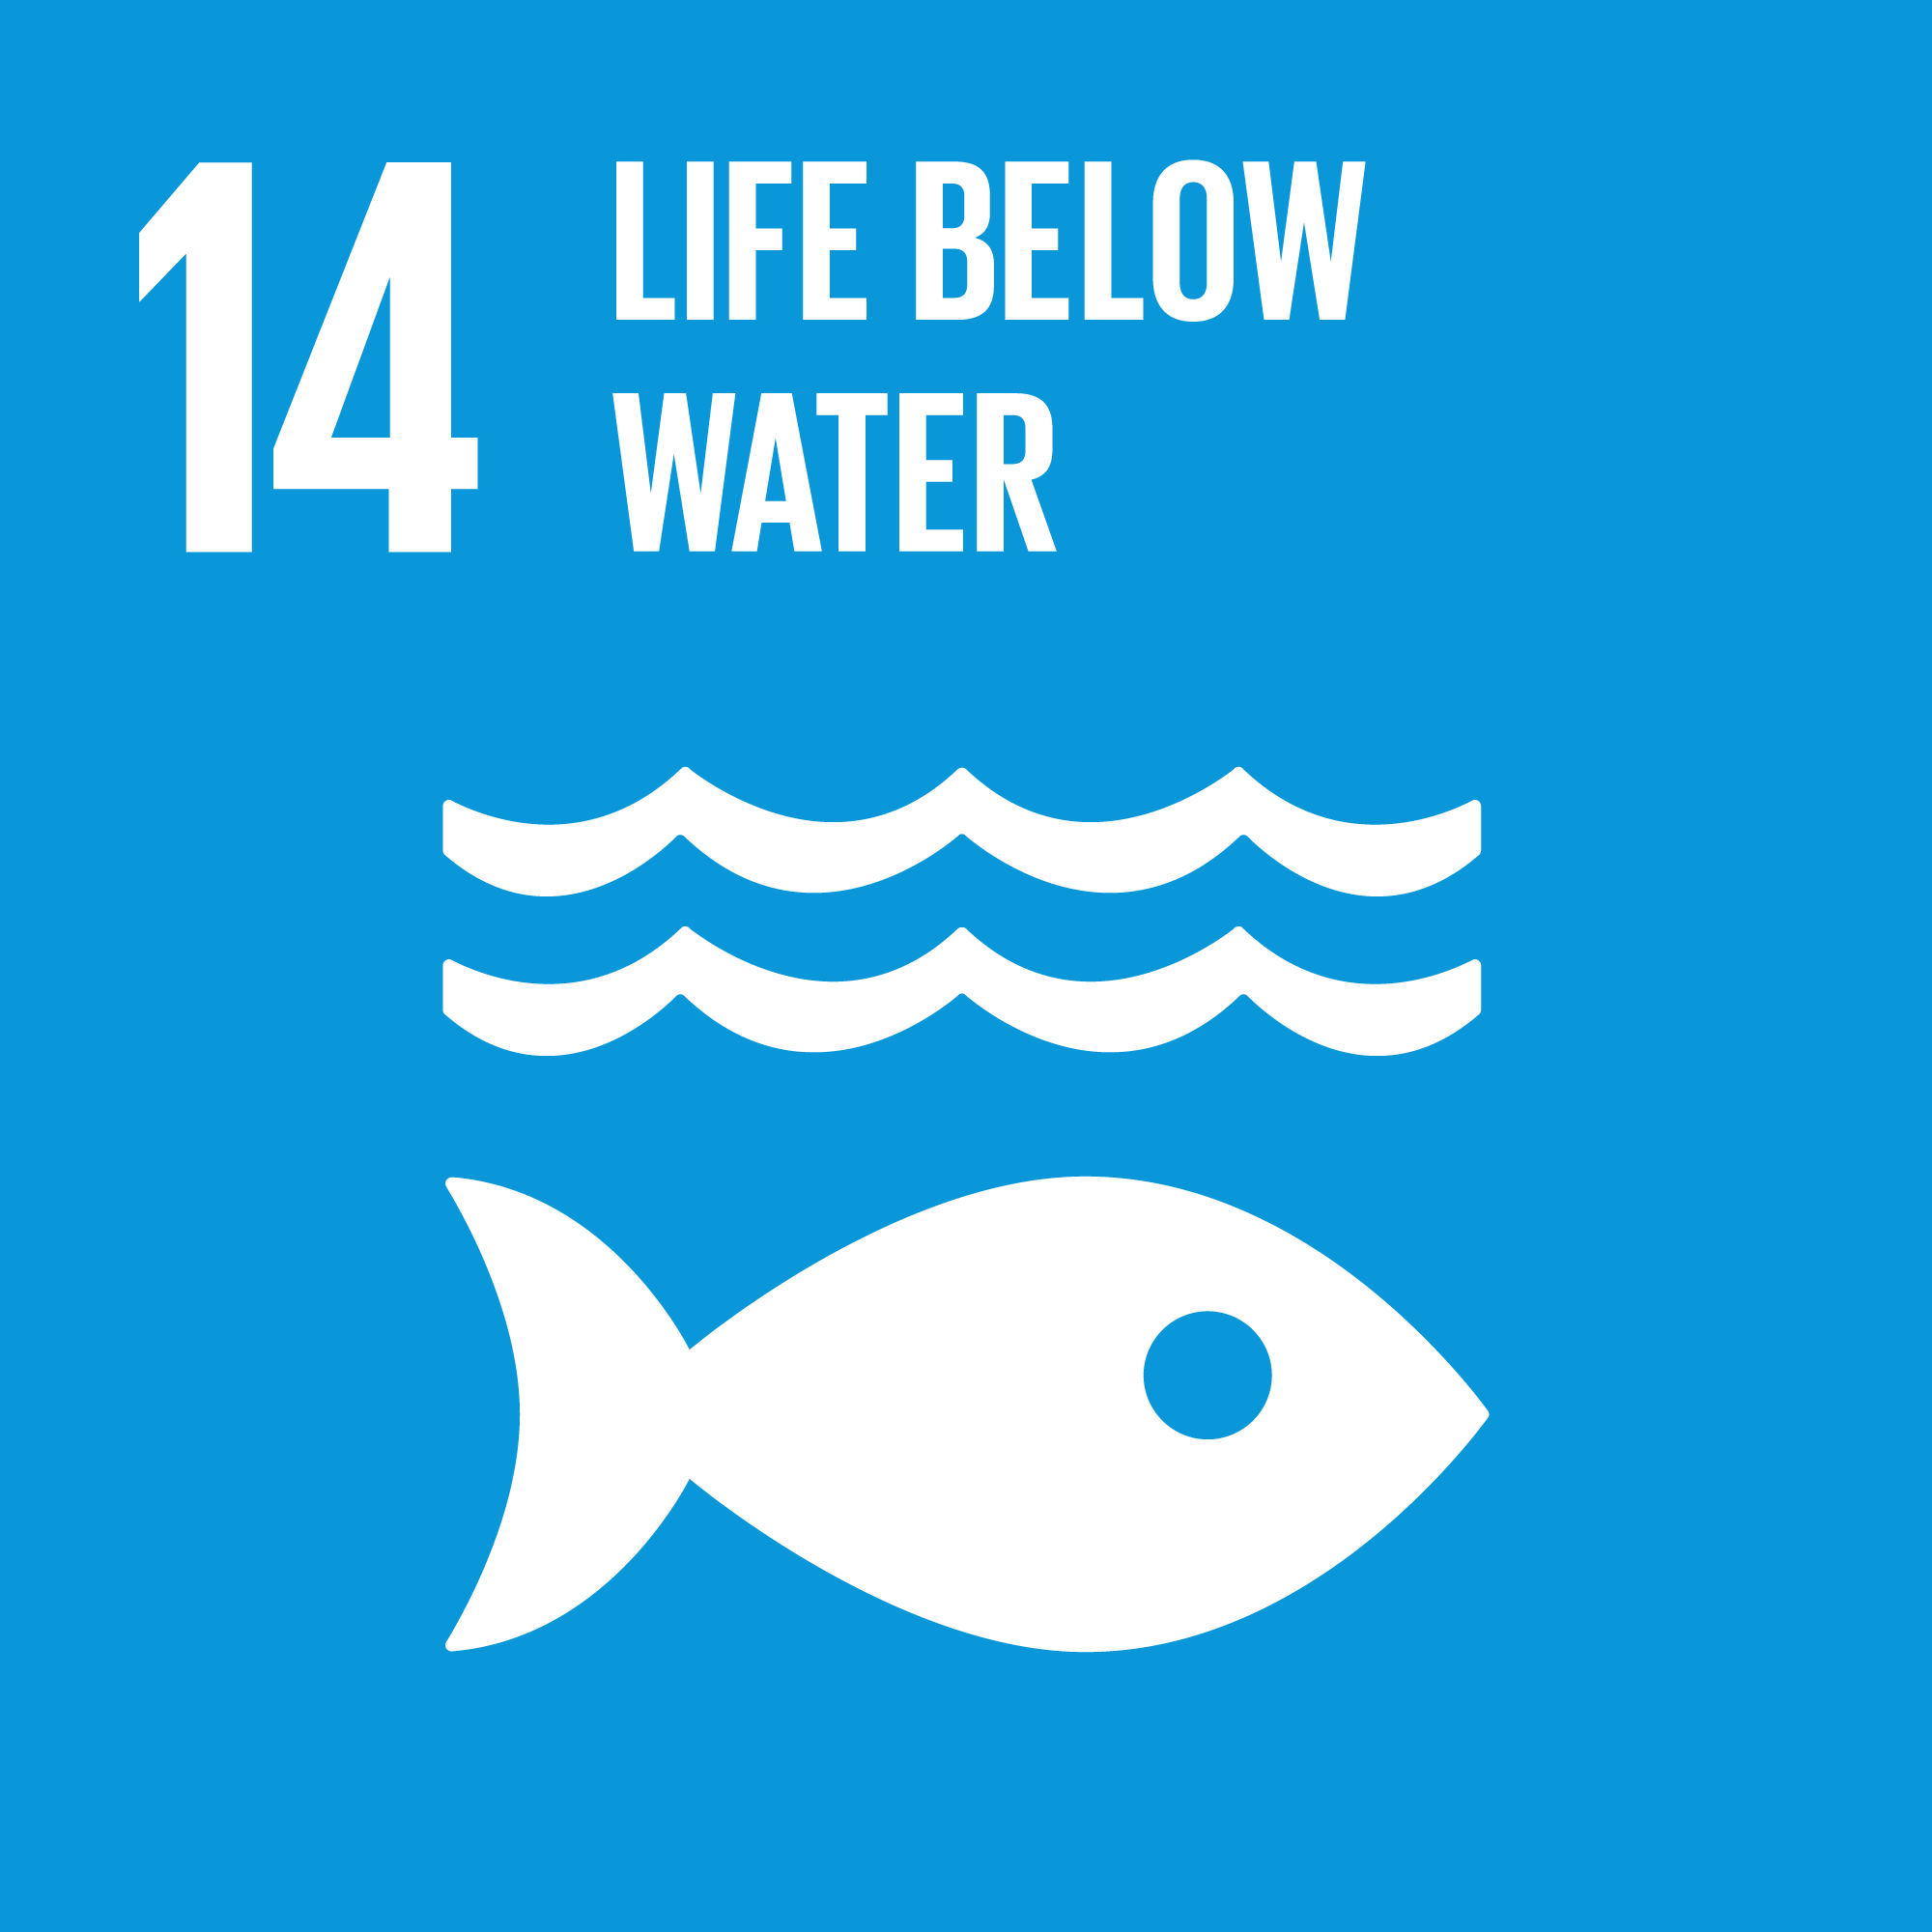 UNSDG Goal 14: Life Below Water